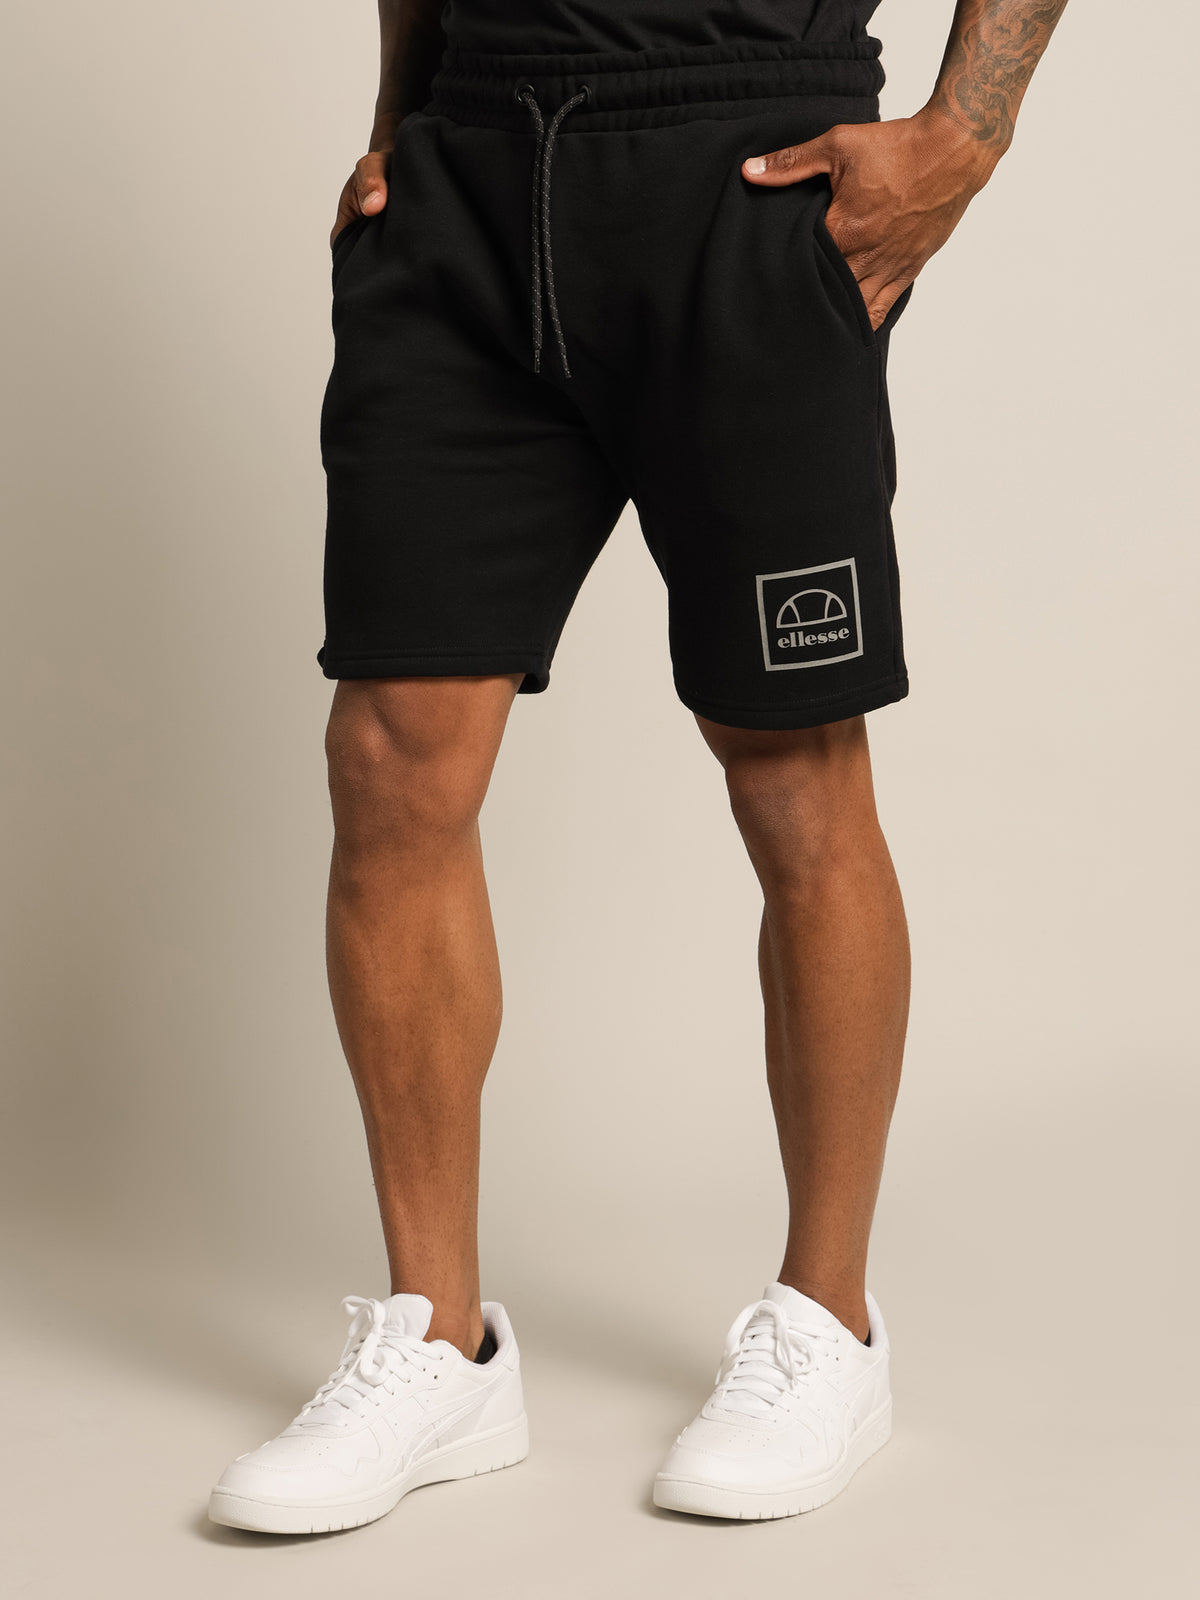 Orlando Shorts in Black